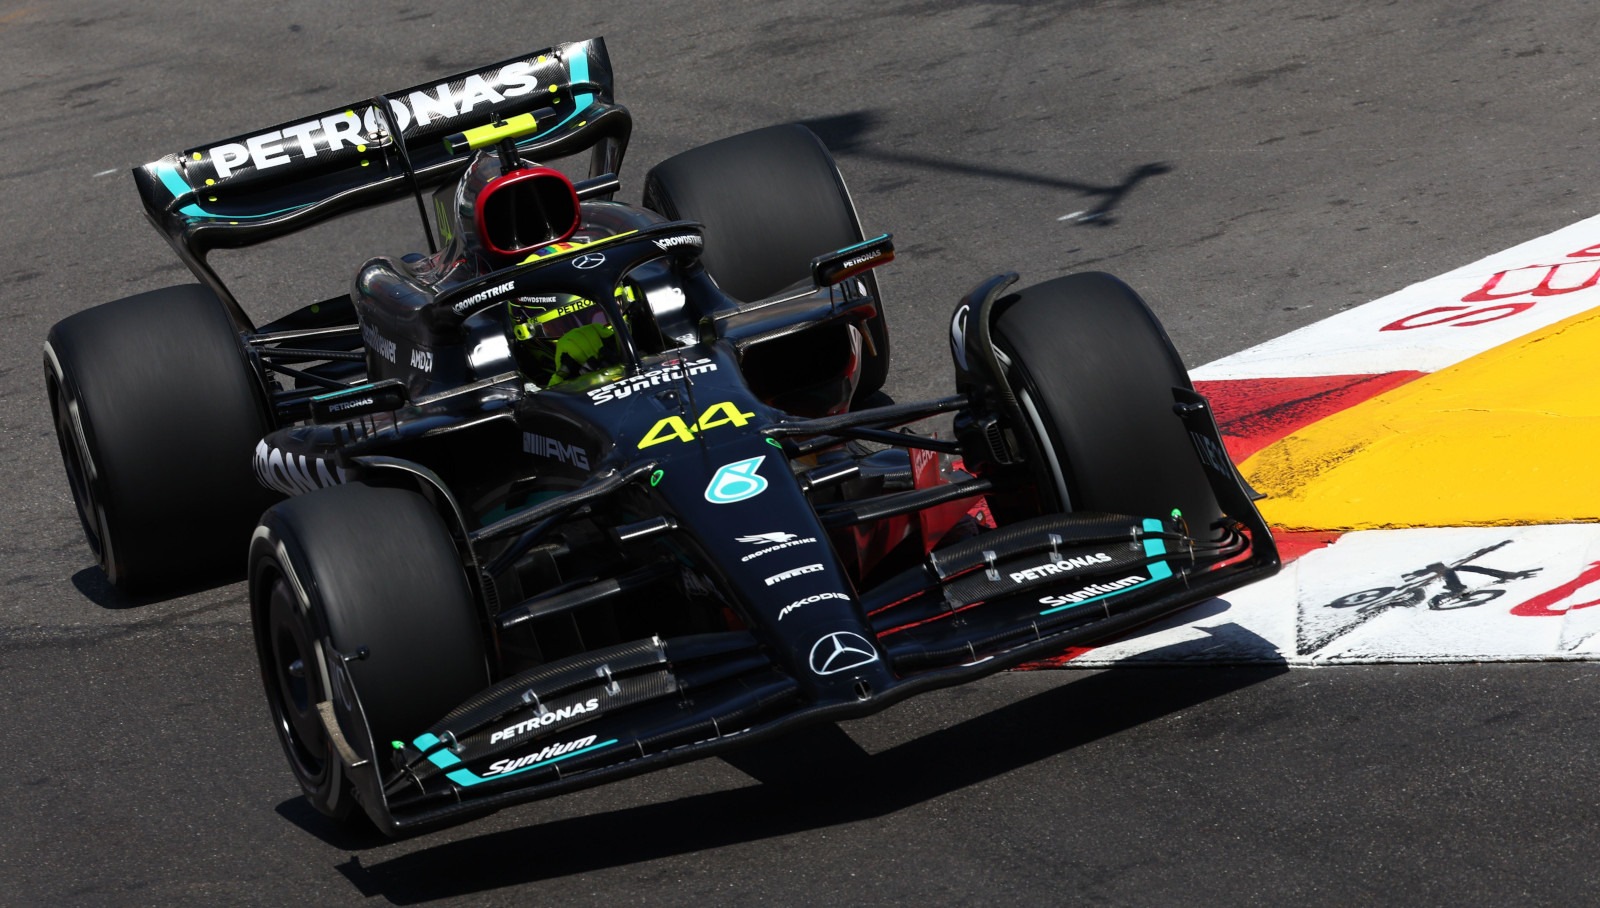 Monaco GP FP1 Carlos Sainz quickest as the revised W14 makes its debut